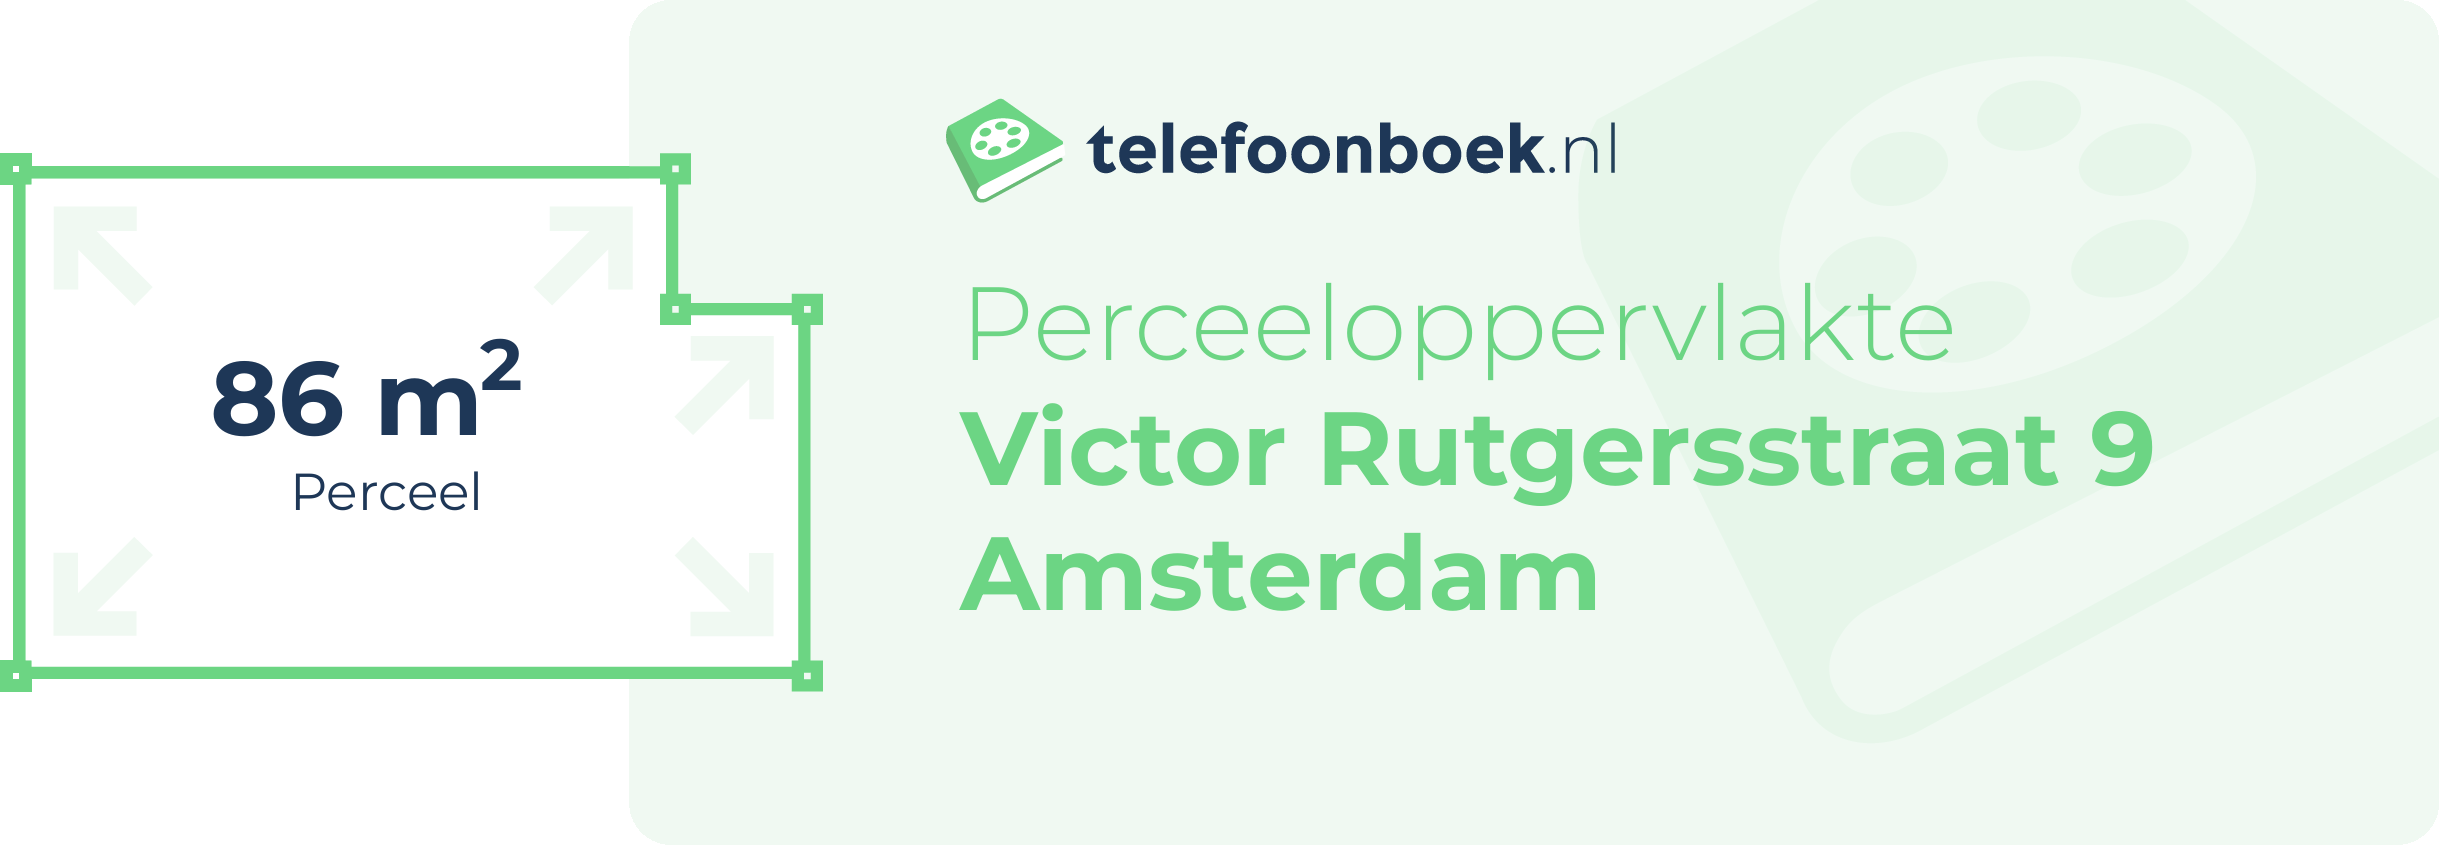 Perceeloppervlakte Victor Rutgersstraat 9 Amsterdam